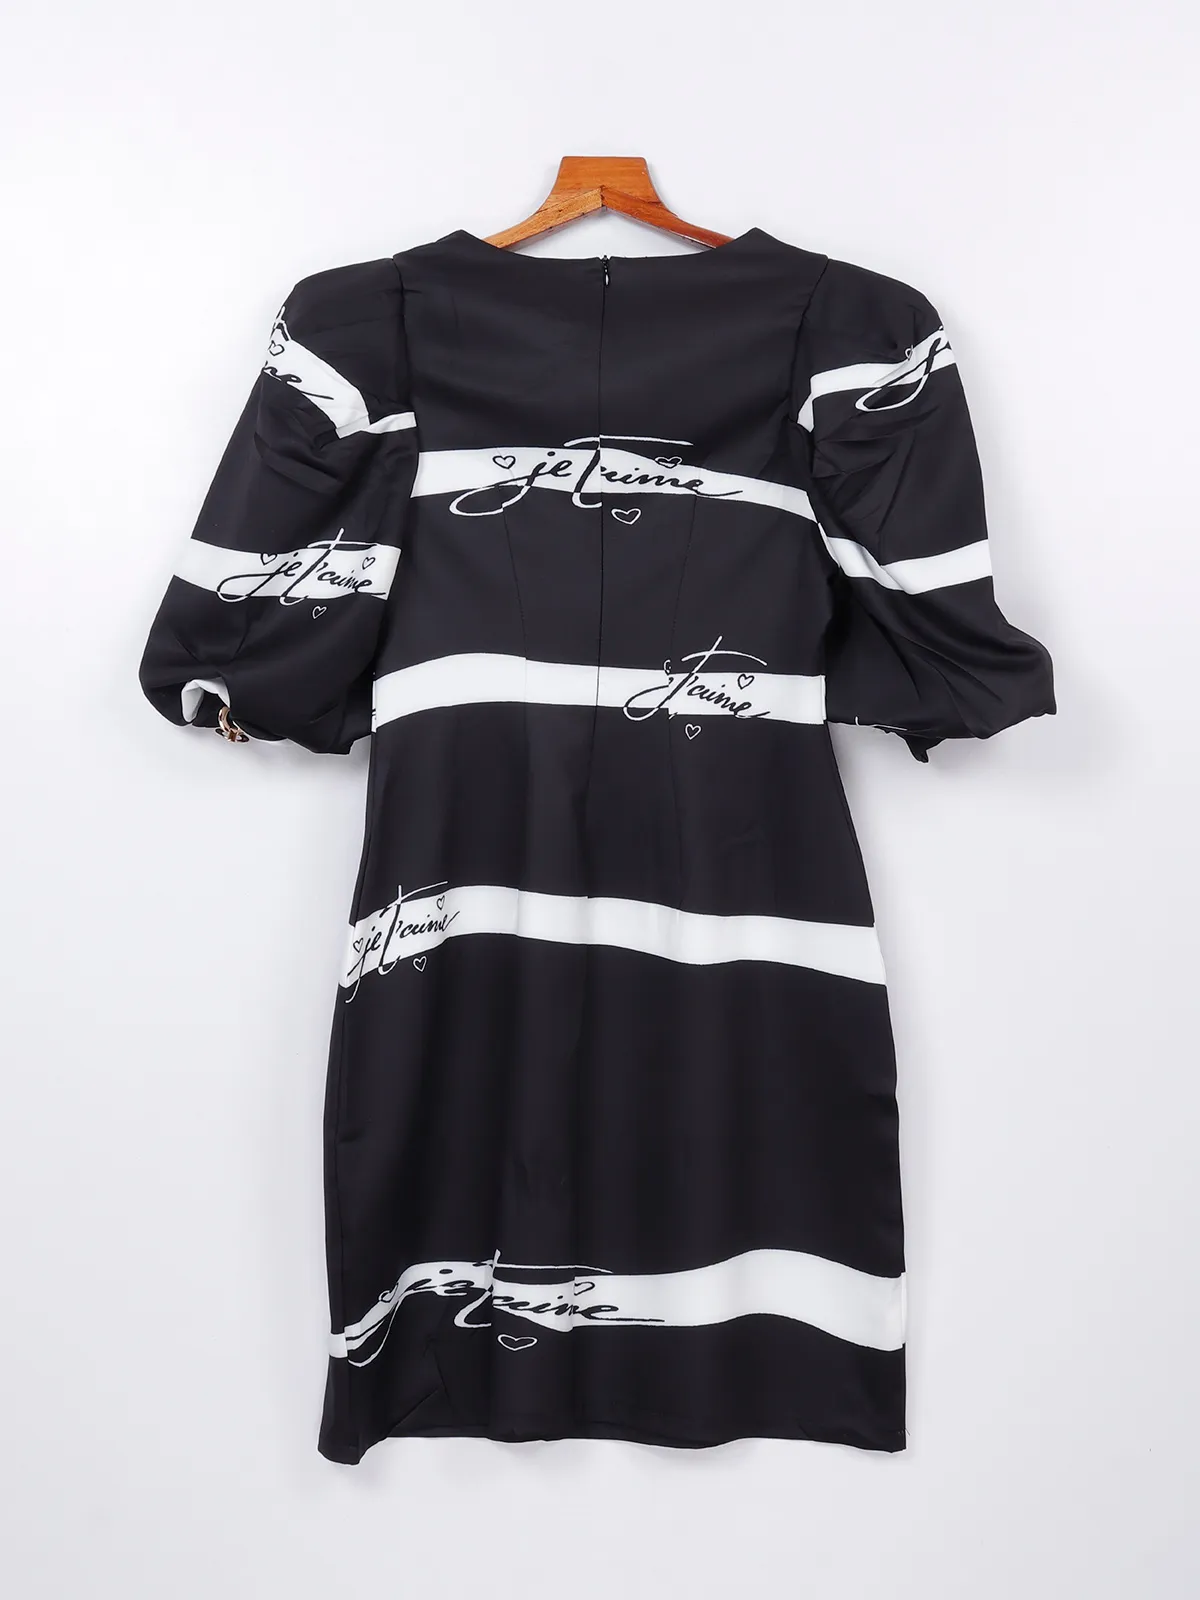 Deal white and black stripe dress